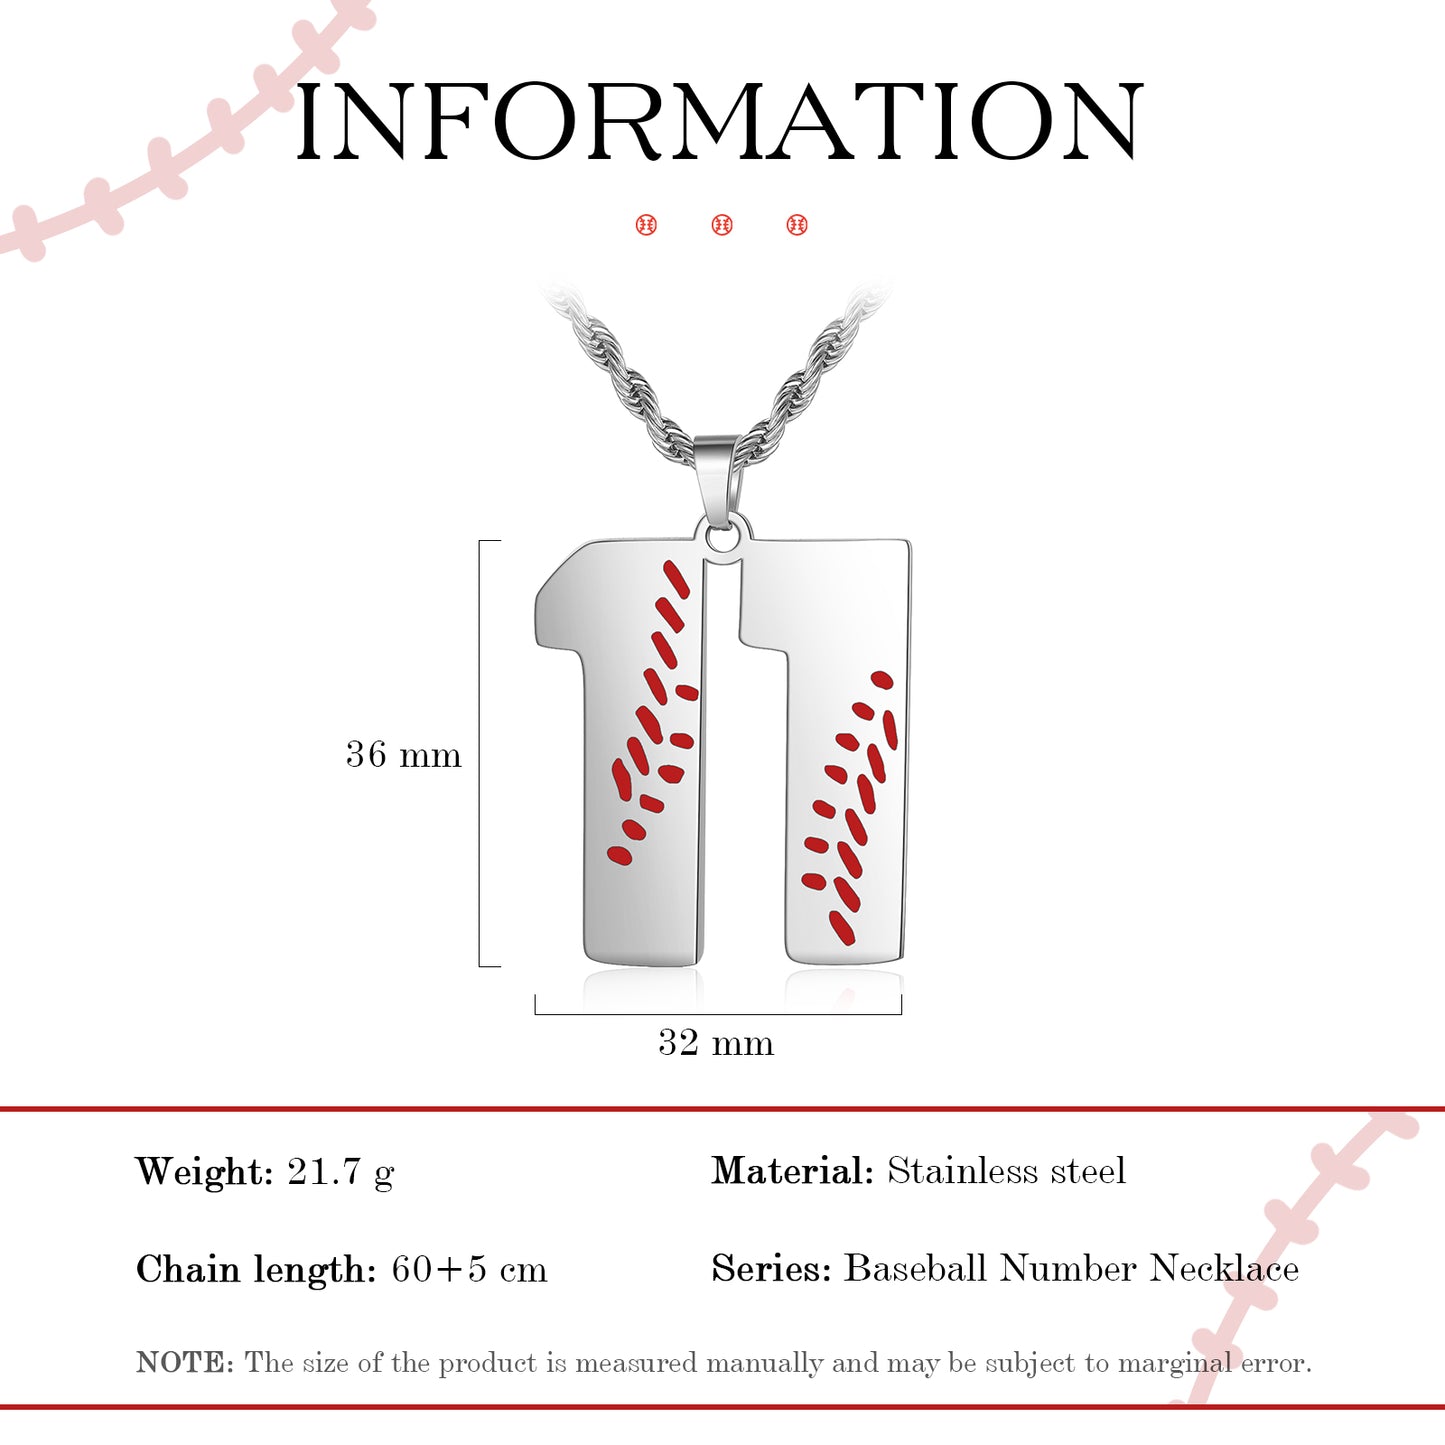 Custom Baseball Number Necklace